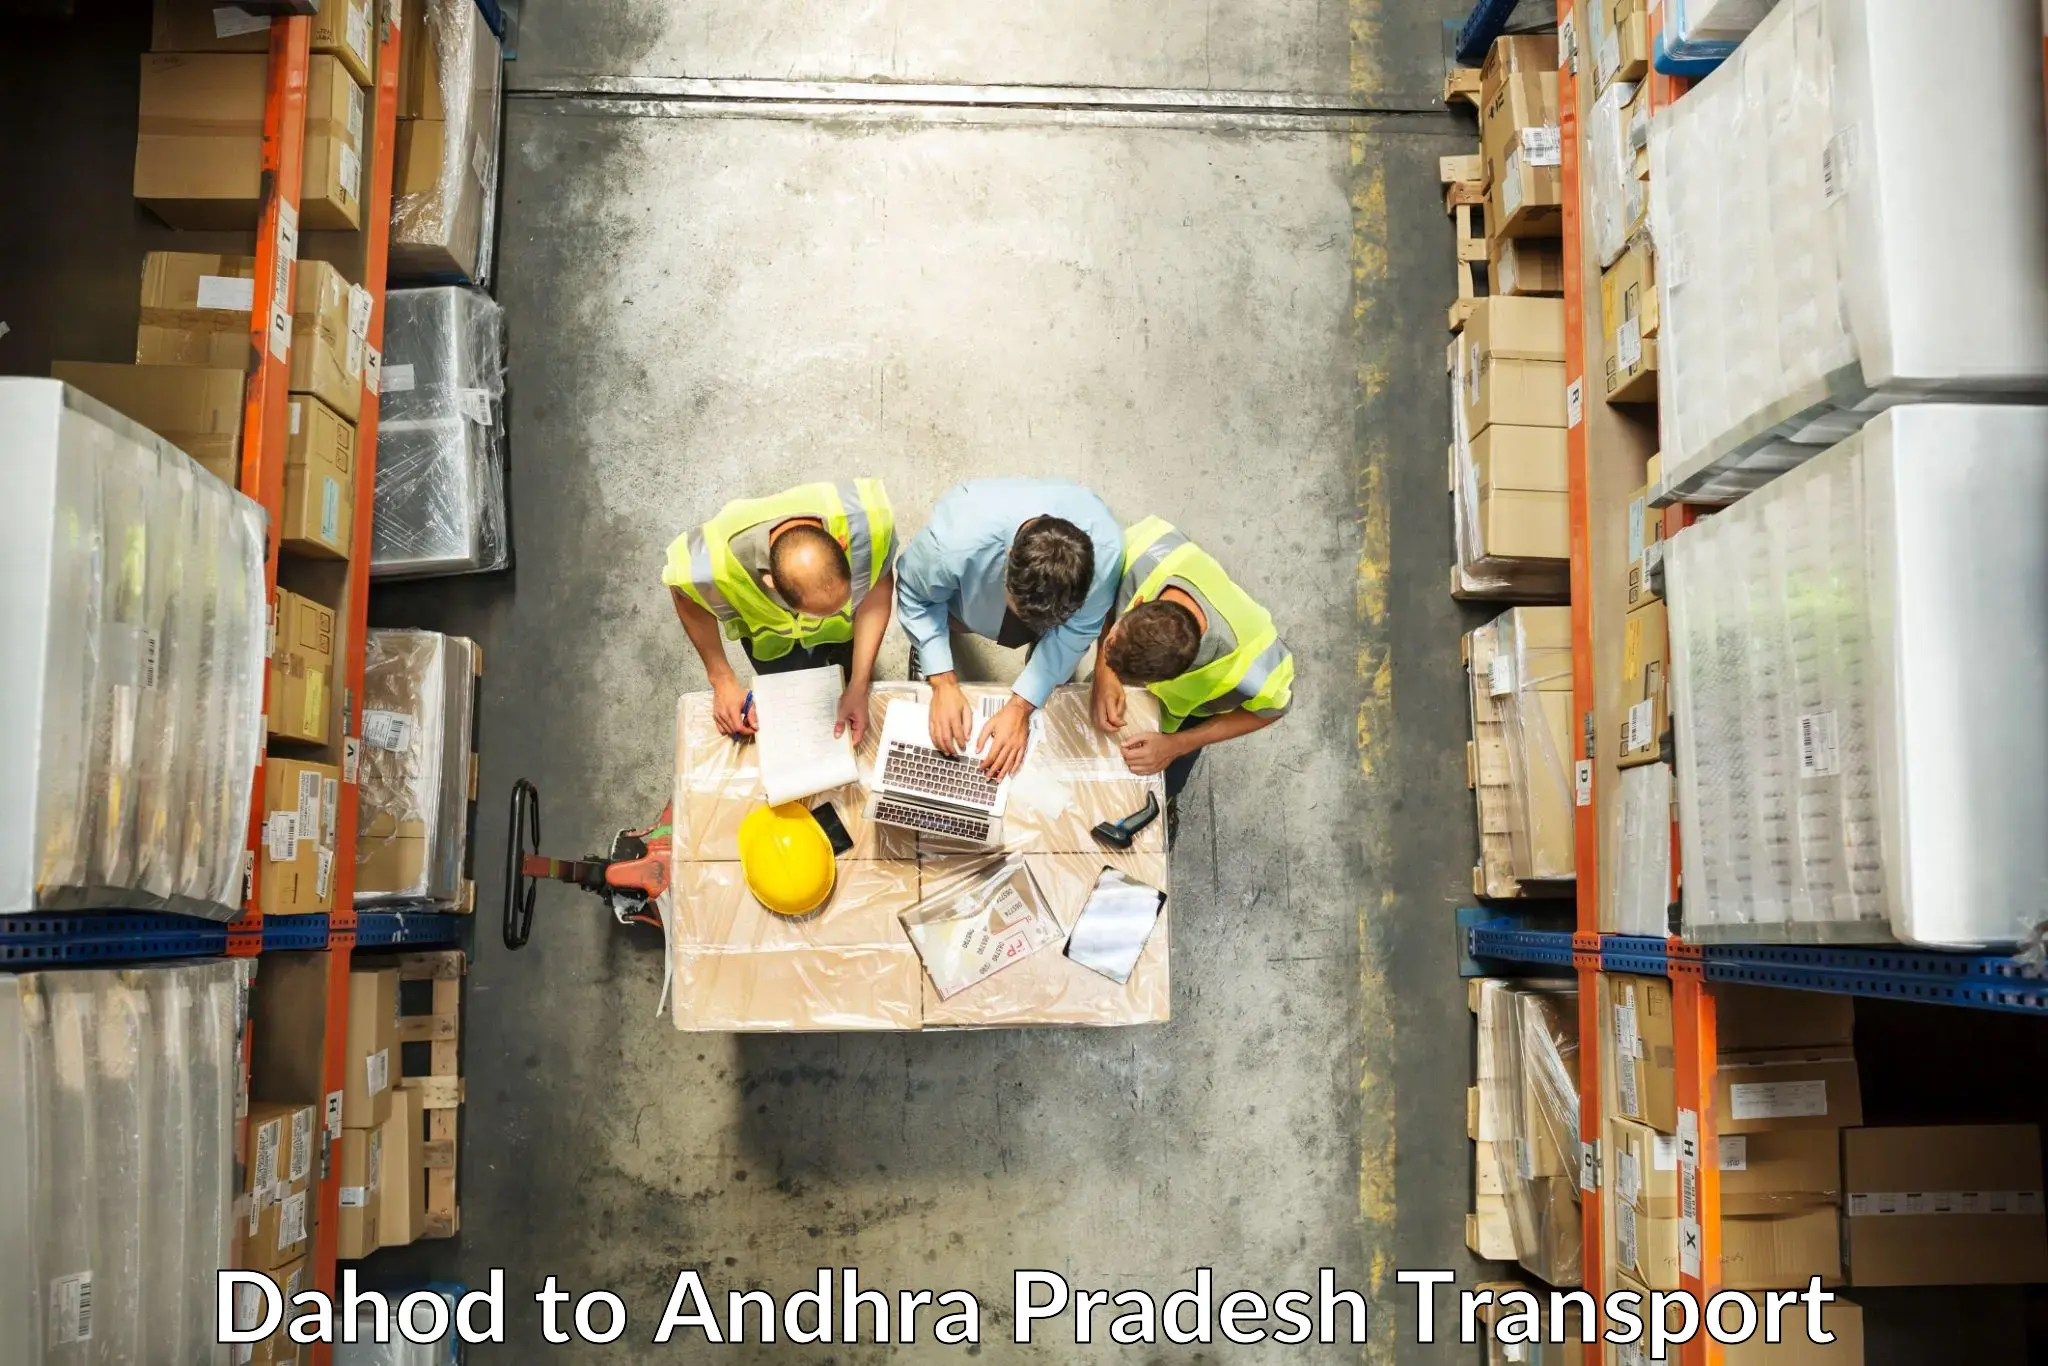 Truck transport companies in India Dahod to Ichchapuram